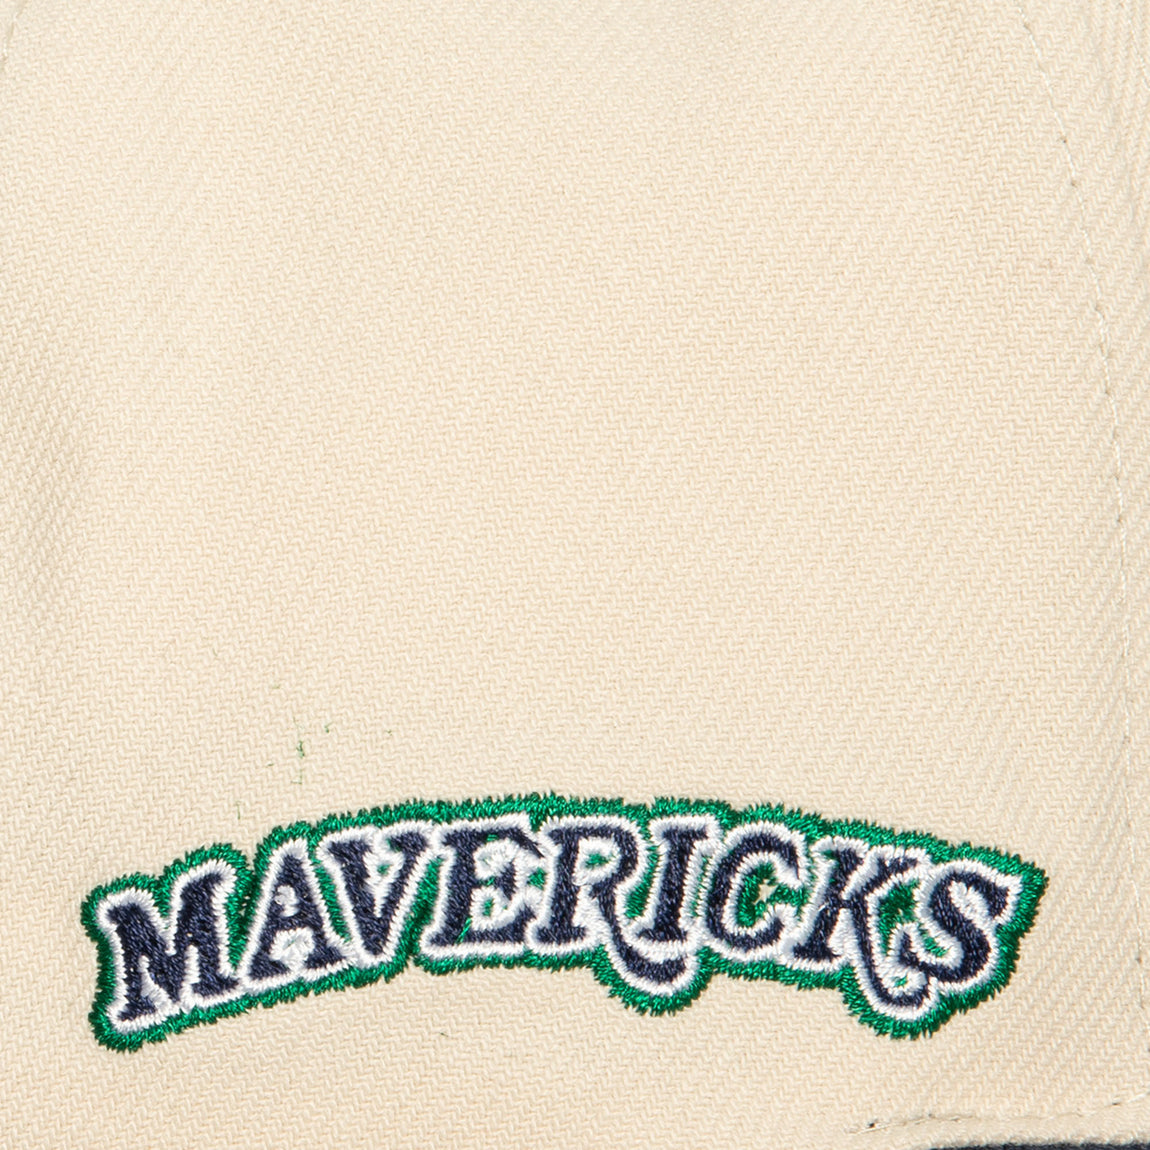 Mitchell & Ness Dallas Mavericks NBA 2 Tone Hardwood Classics Snapback Hat ( Off White / Navy ) - Mitchell & Ness Dallas Mavericks NBA 2 Tone Hardwood Classics Snapback Hat ( Off White / Navy ) - 